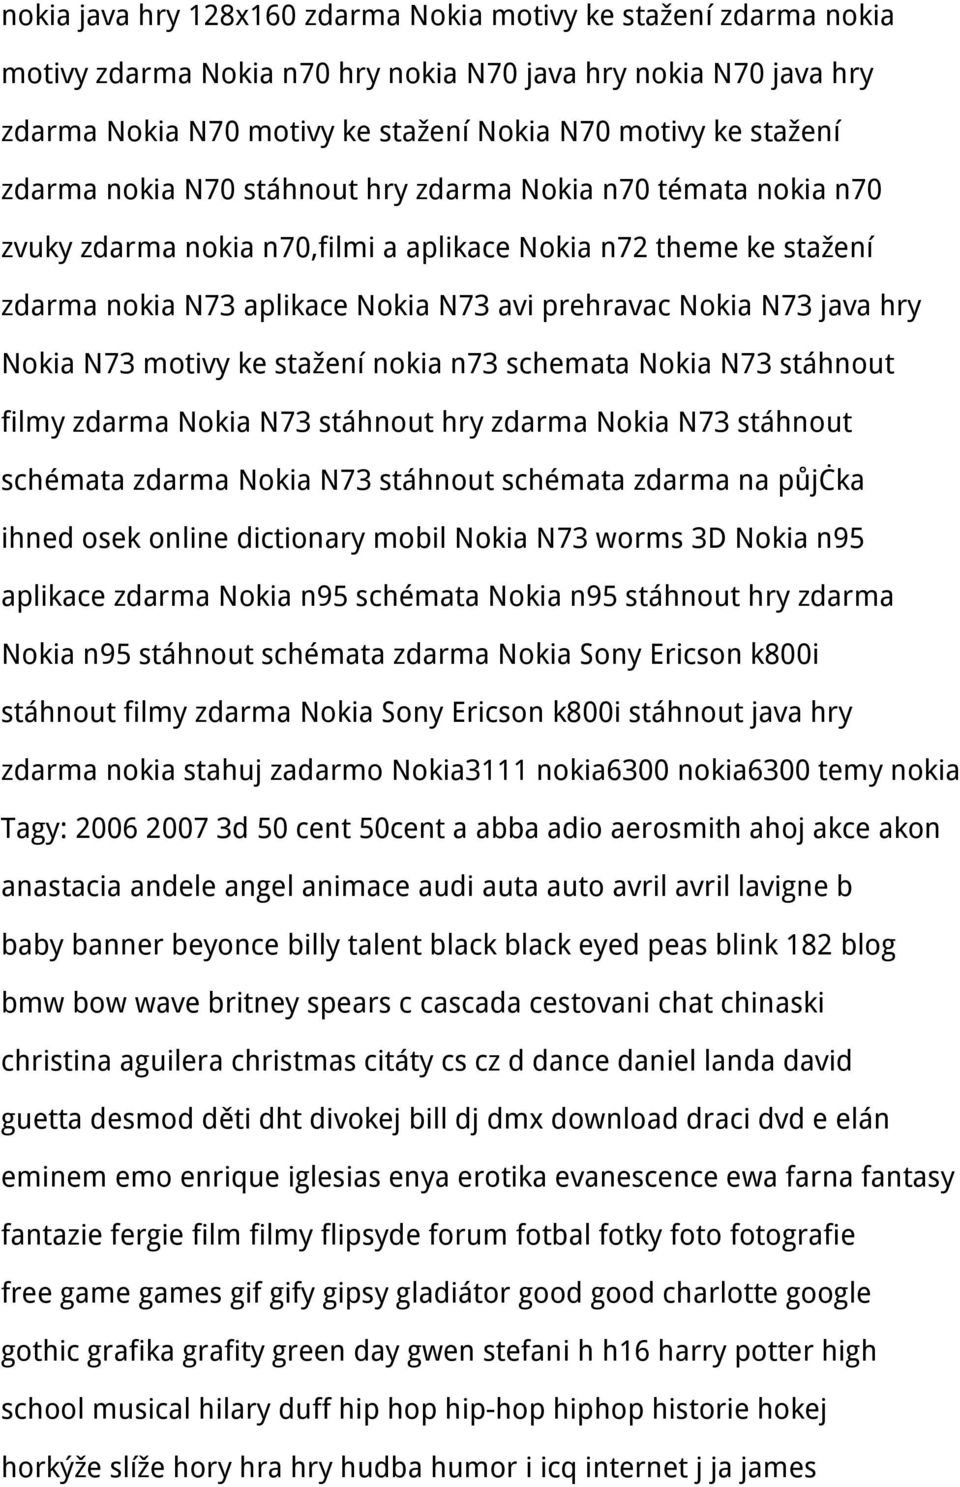 Nokia N73 motivy ke stažení nokia n73 schemata Nokia N73 stáhnout filmy zdarma Nokia N73 stáhnout hry zdarma Nokia N73 stáhnout schémata zdarma Nokia N73 stáhnout schémata zdarma na půjčka ihned osek